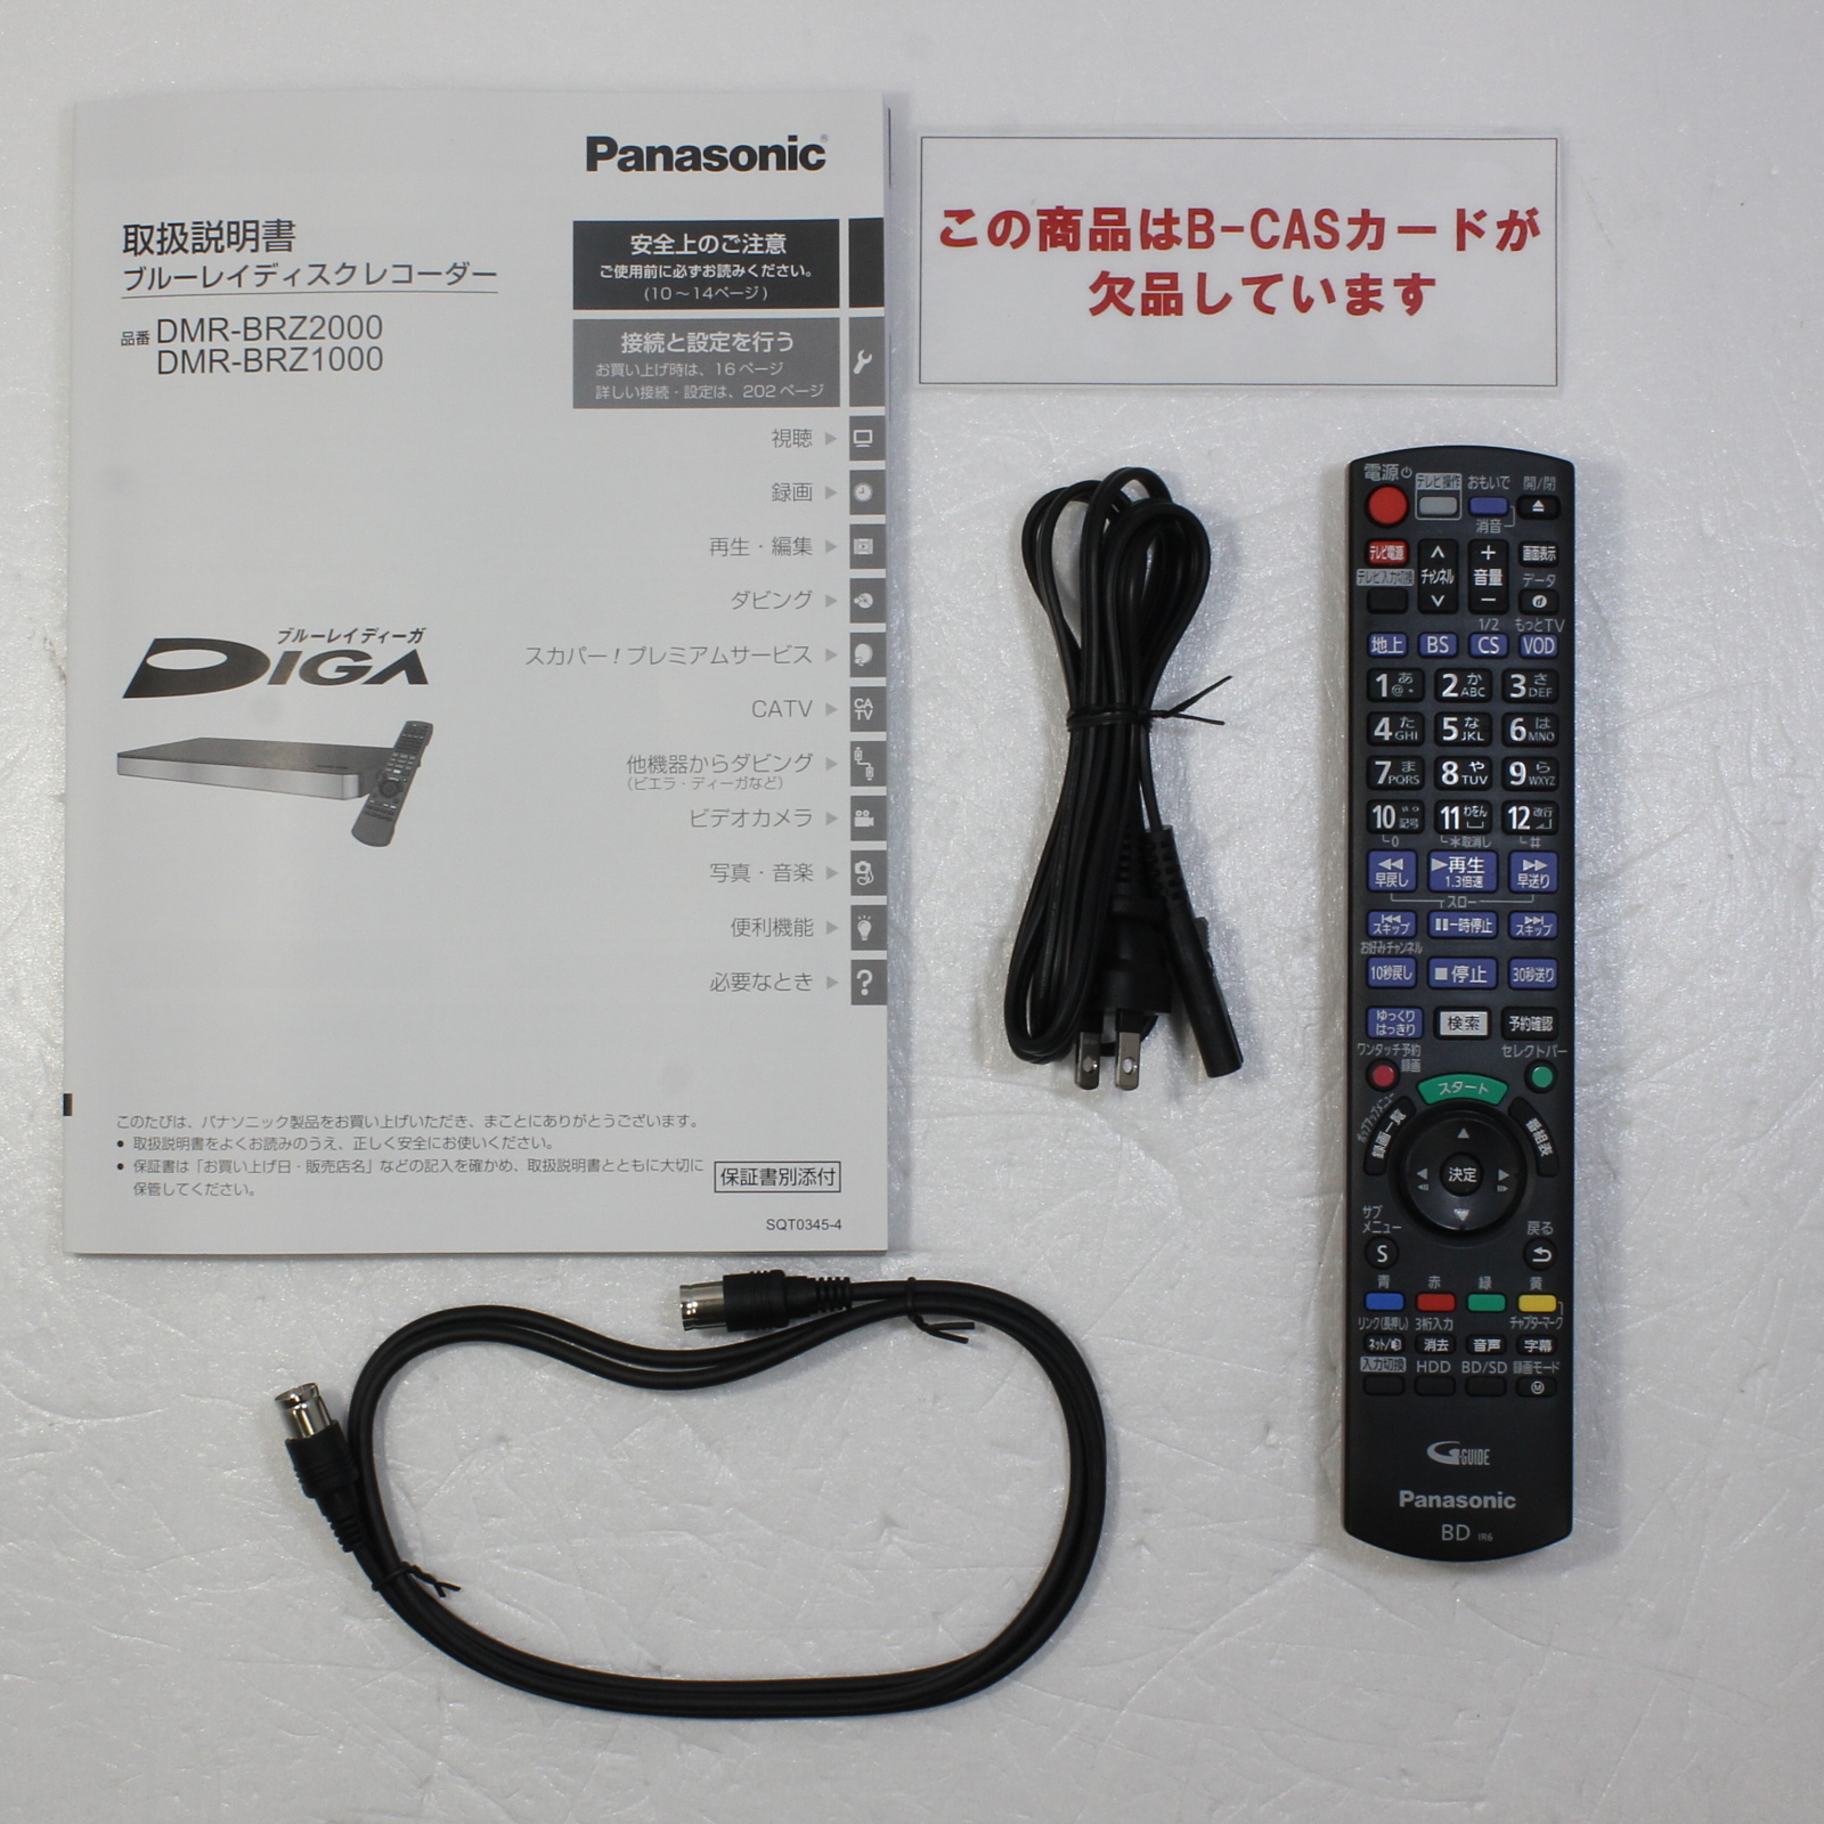 Panasonic ブルーレイ DIGA DMR-BRZ1000 - テレビ/映像機器